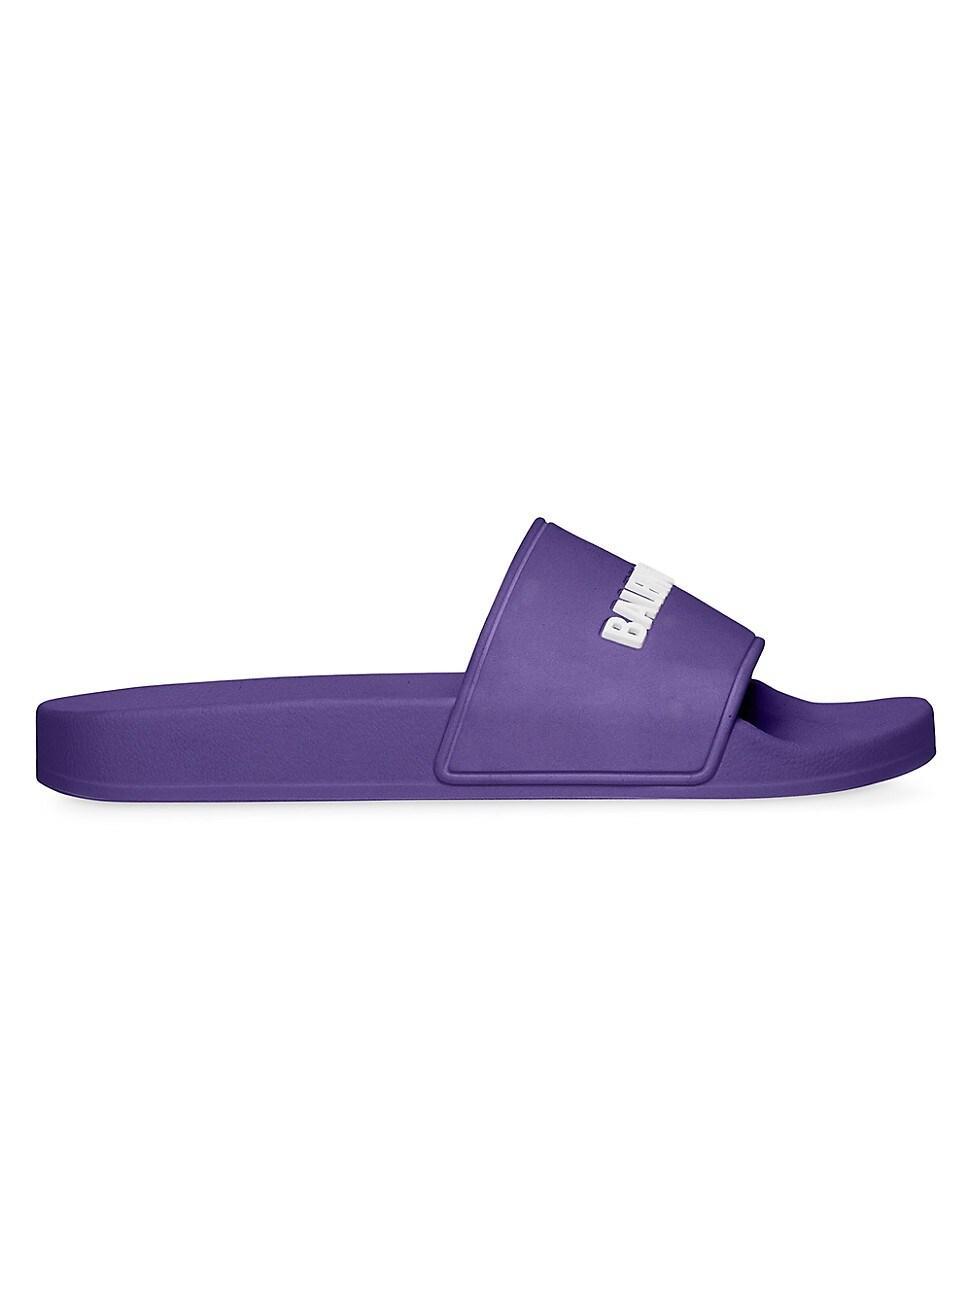 Mens Pool Slide Sandal Product Image